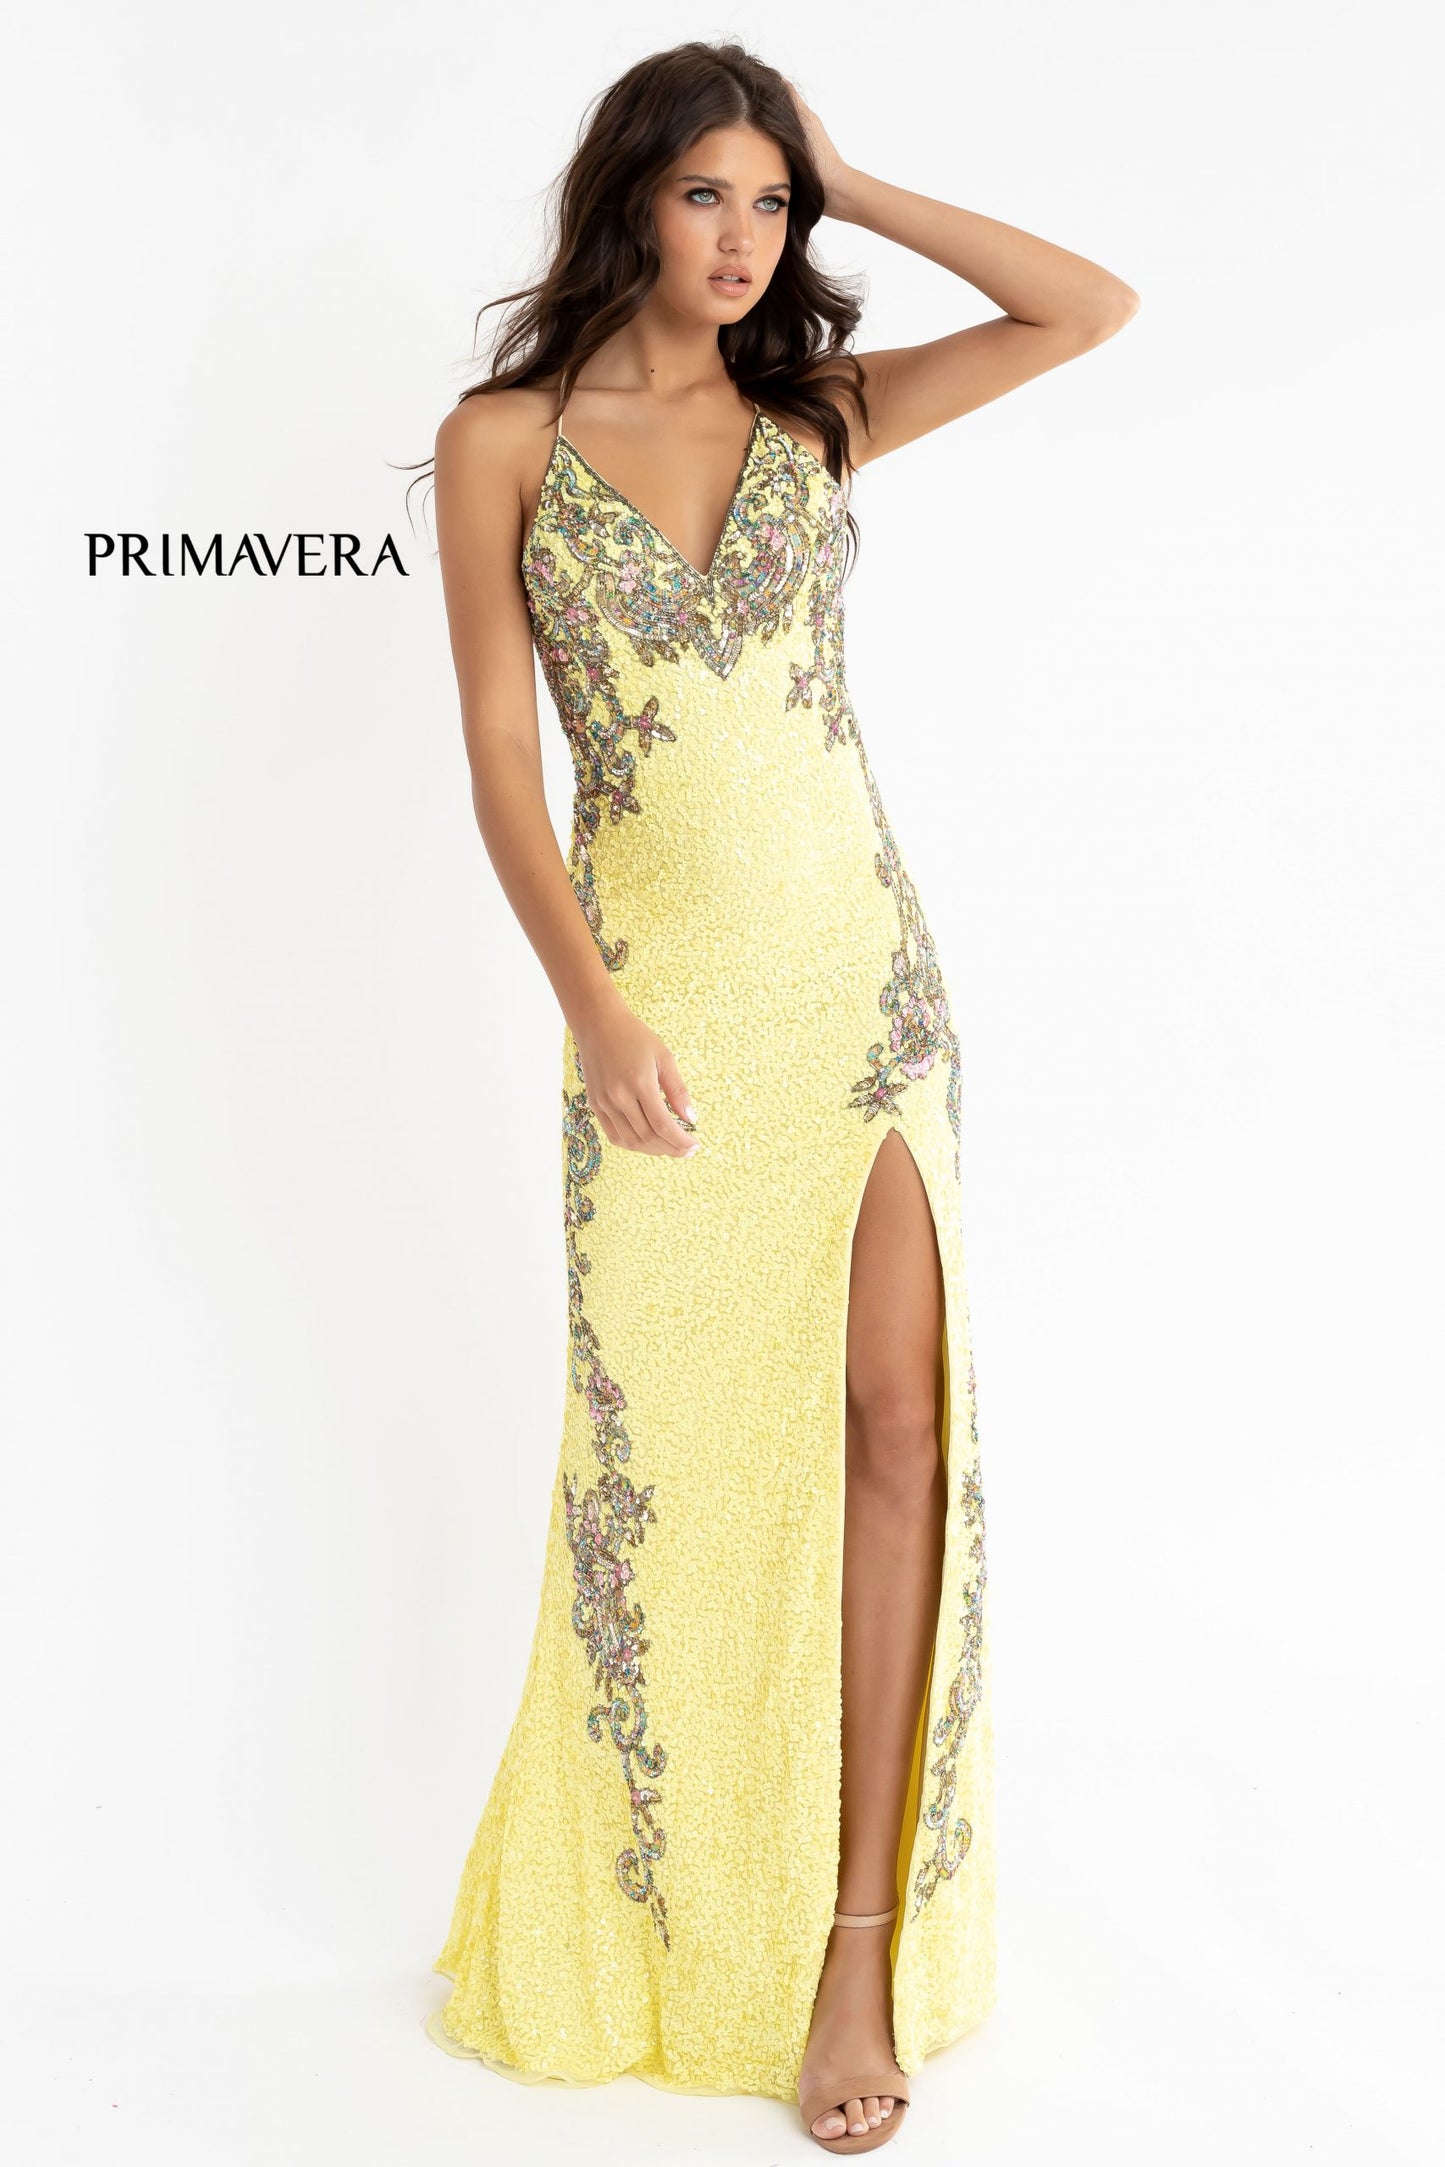 Primavera-Couture-3211-Yellow-prom-dress-front-v-neckline-floral-sequins-lace-up-tie-back-slit.